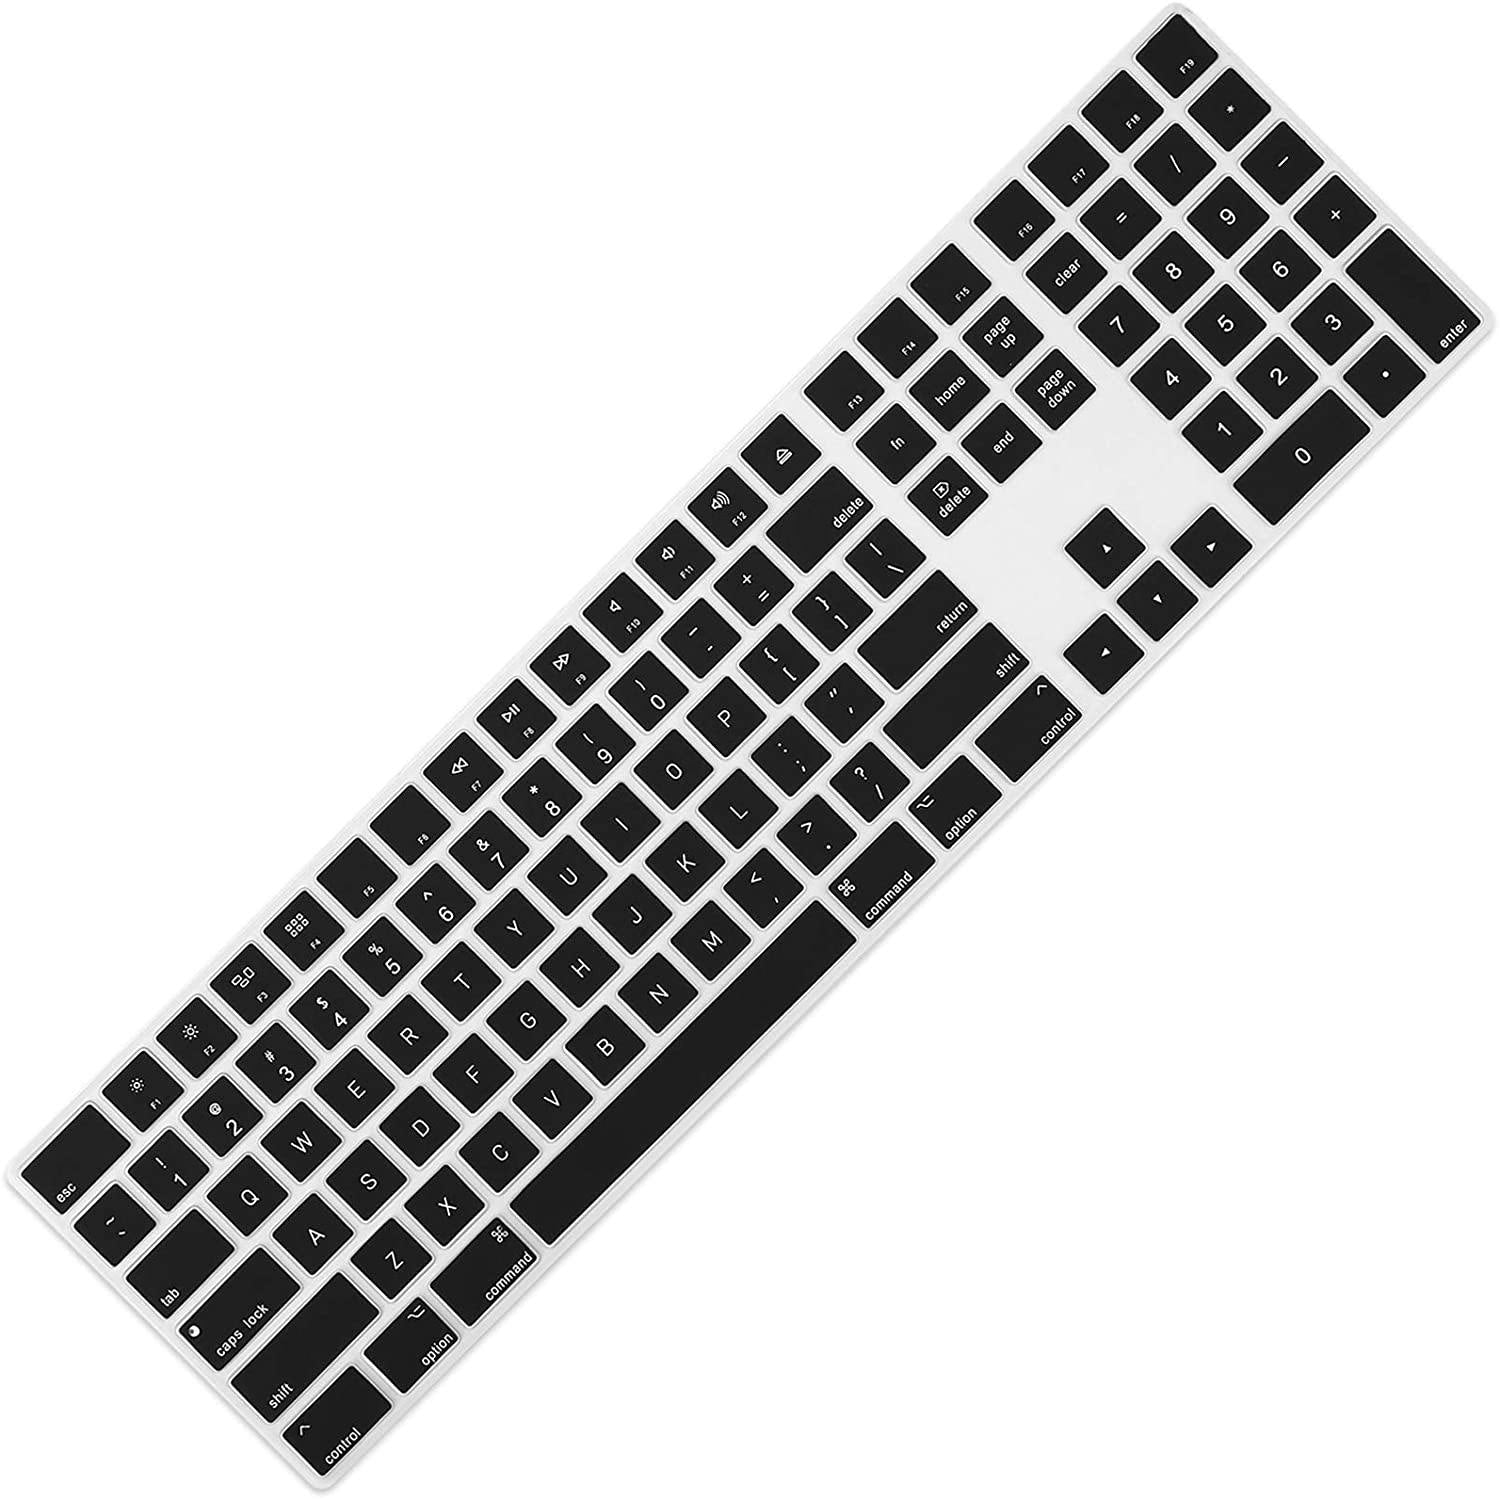 Silicone Keyboard Skin Cover for  Apple iMac Magic Keyboard with Numeric Keypad MQ052LL/A A1843 US Layout (Black) - iFyx